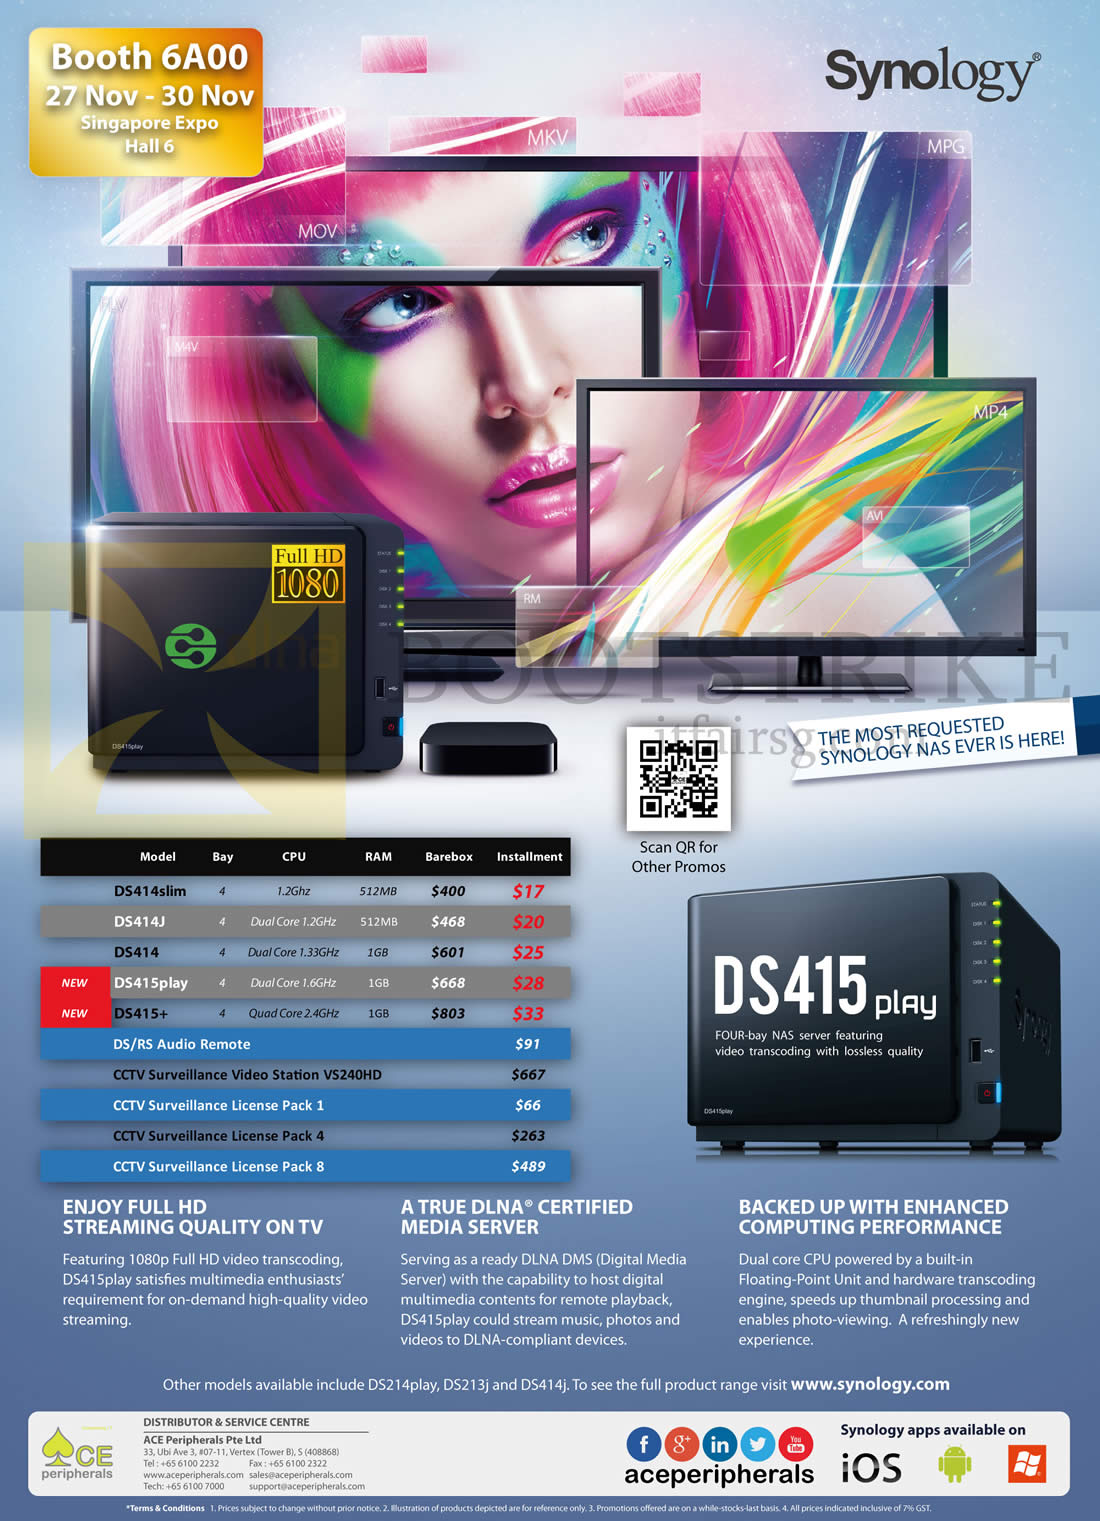 SITEX 2014 price list image brochure of Ace Peripherals Synology NAS DiskStation DS414slim, DS414J, DS414, DS415play, DS415Plus, CCTV Surveillance